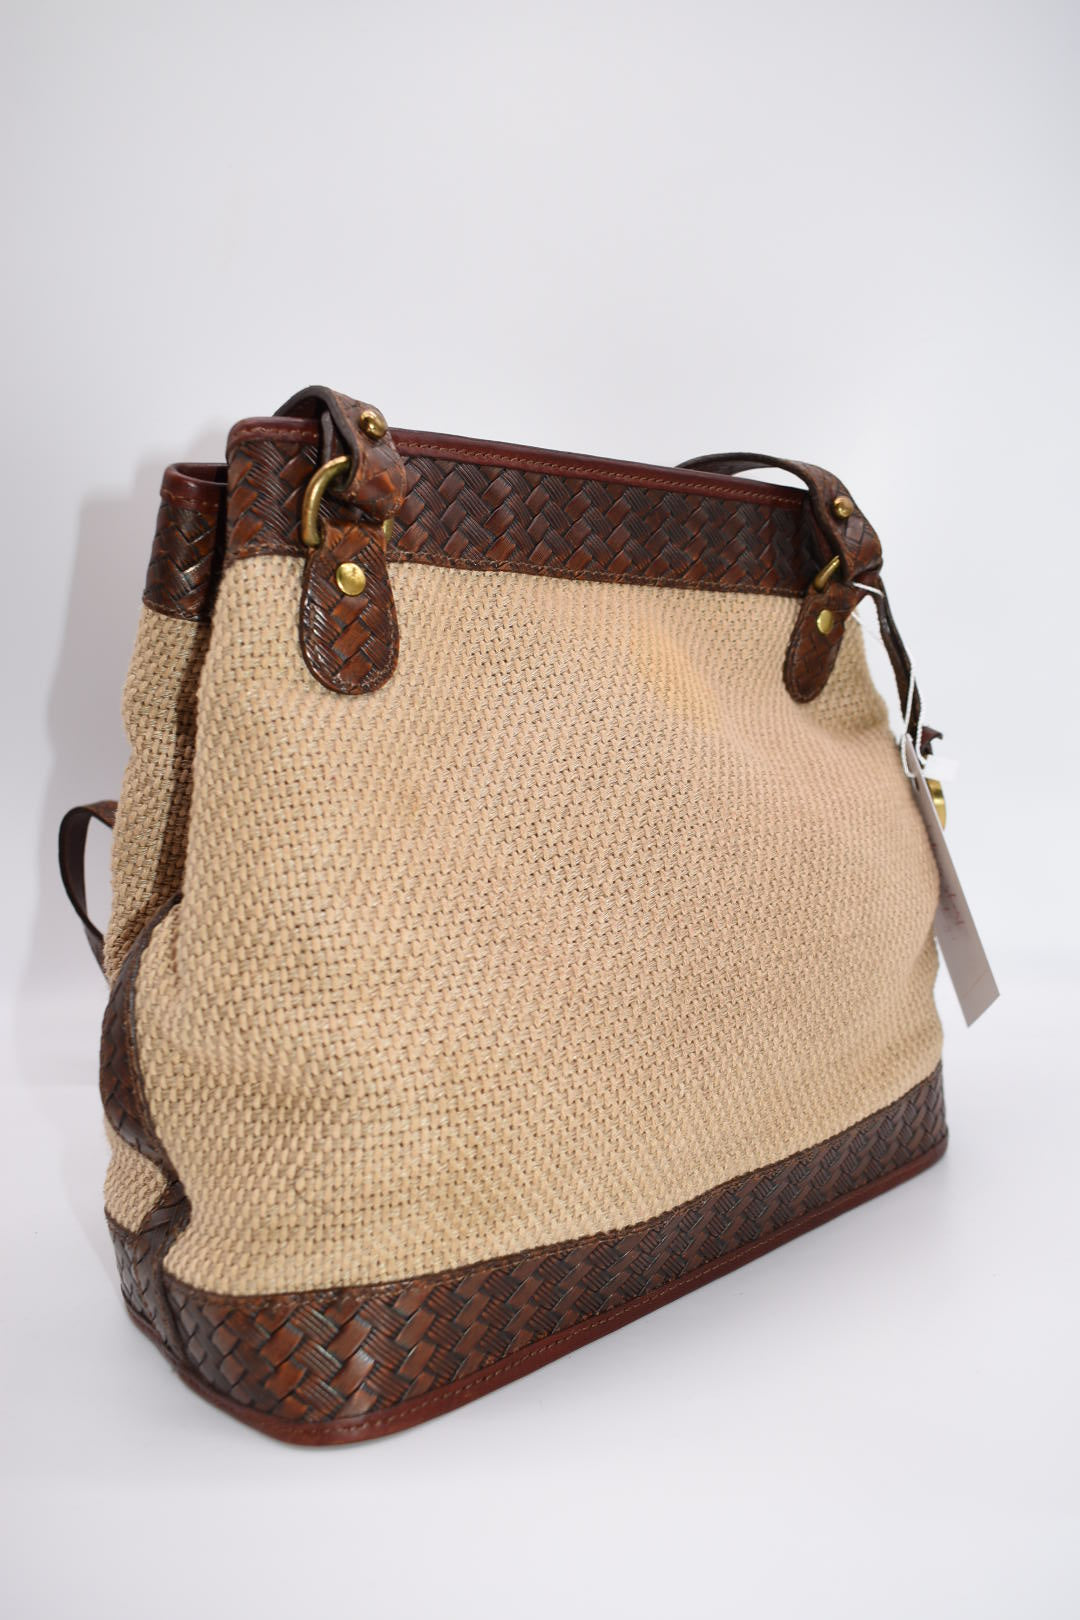 Brahmin Leather & Natural Canvas Tote Bag